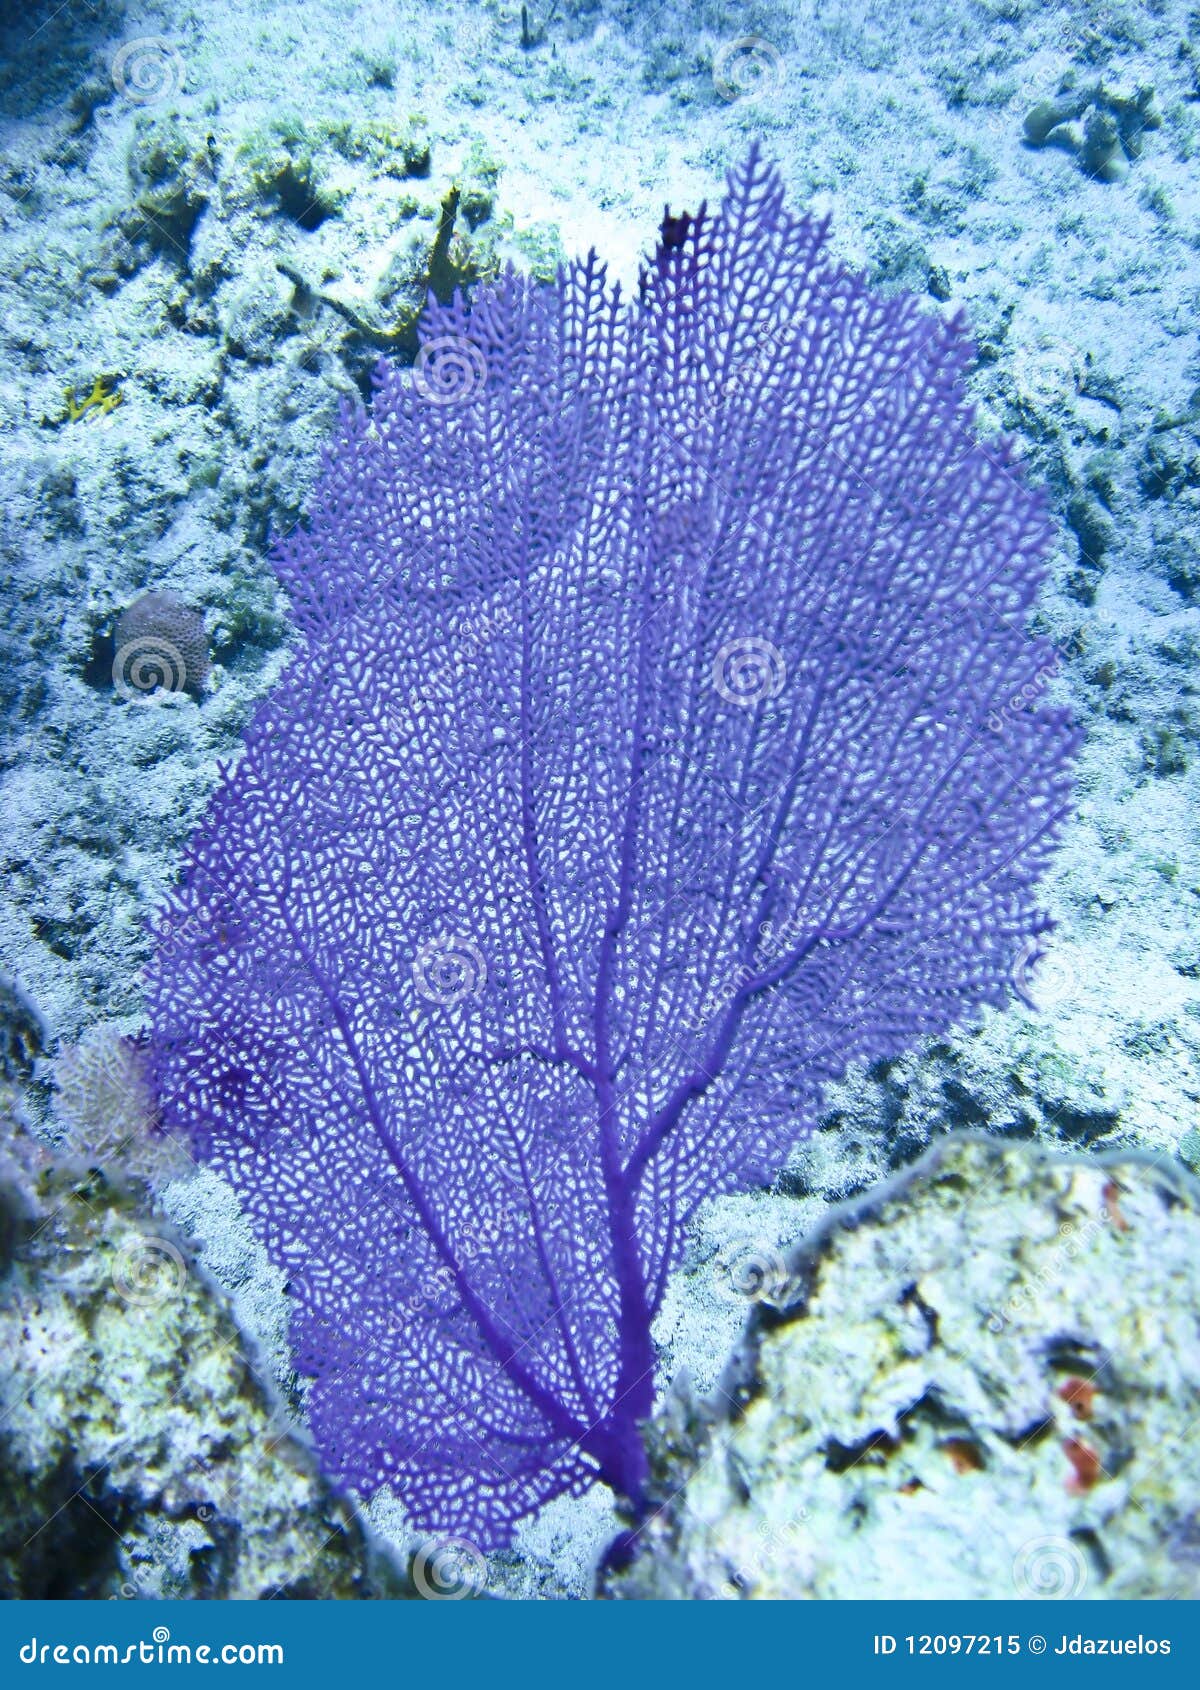 Purple Staghorn Coral